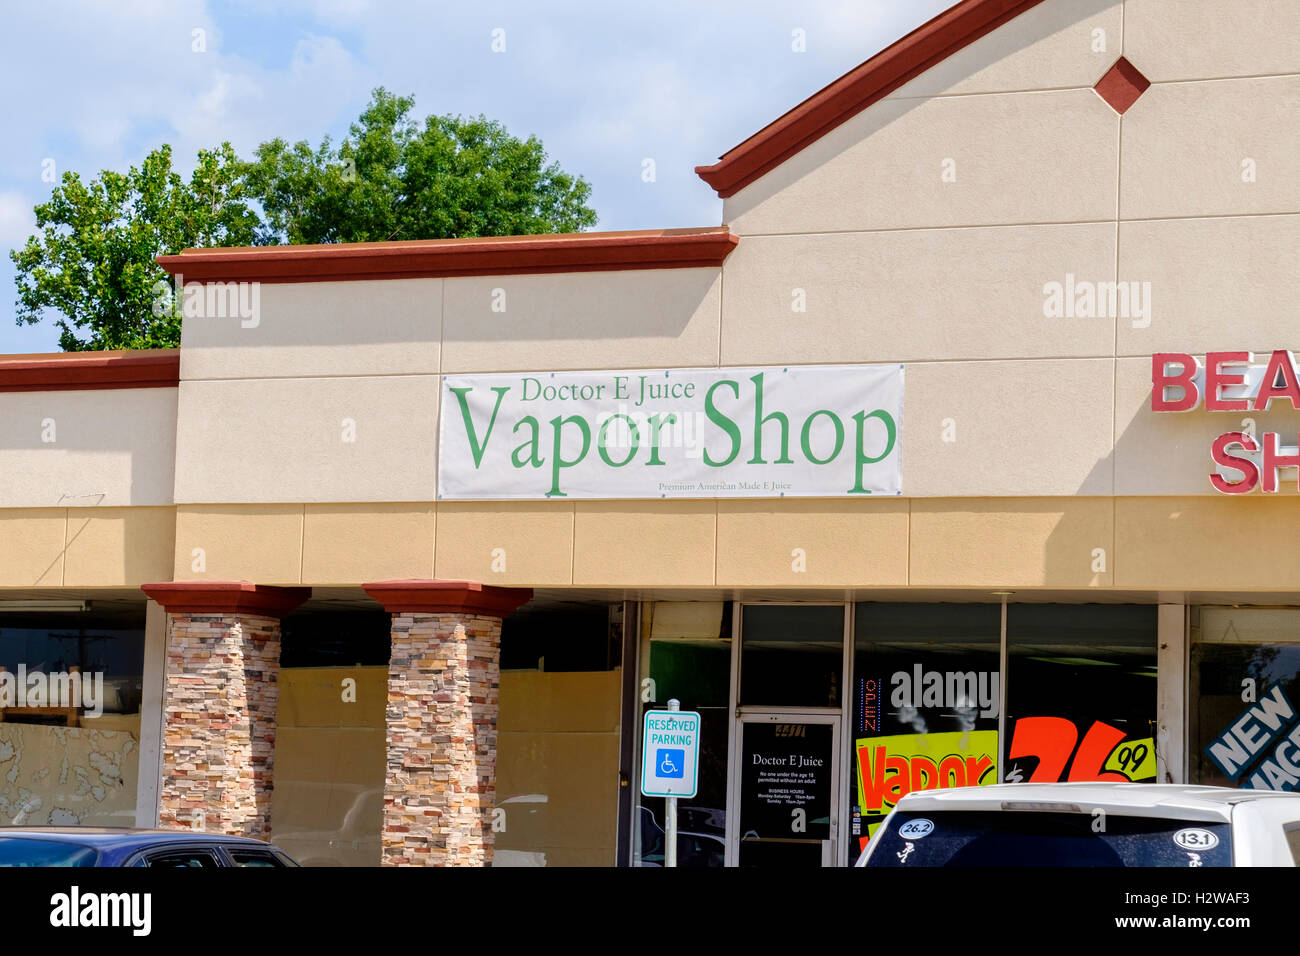 The storefront of a vapor shop in Oklahoma City, Oklahoma, USA. Stock Photo